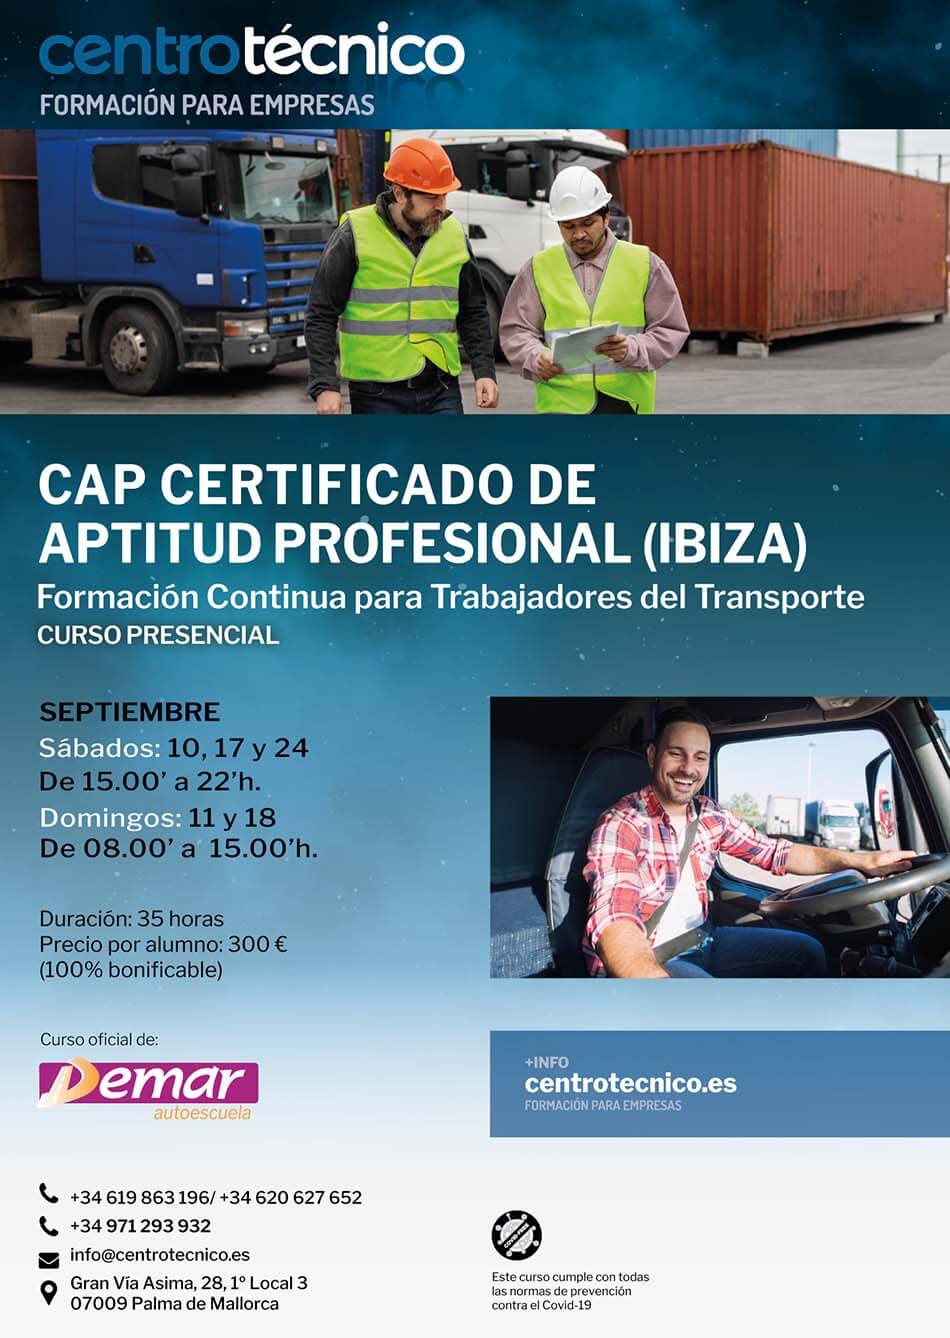 CAP Certificado de Aptitud Profesional, CentroTécnico - Formación para empresas